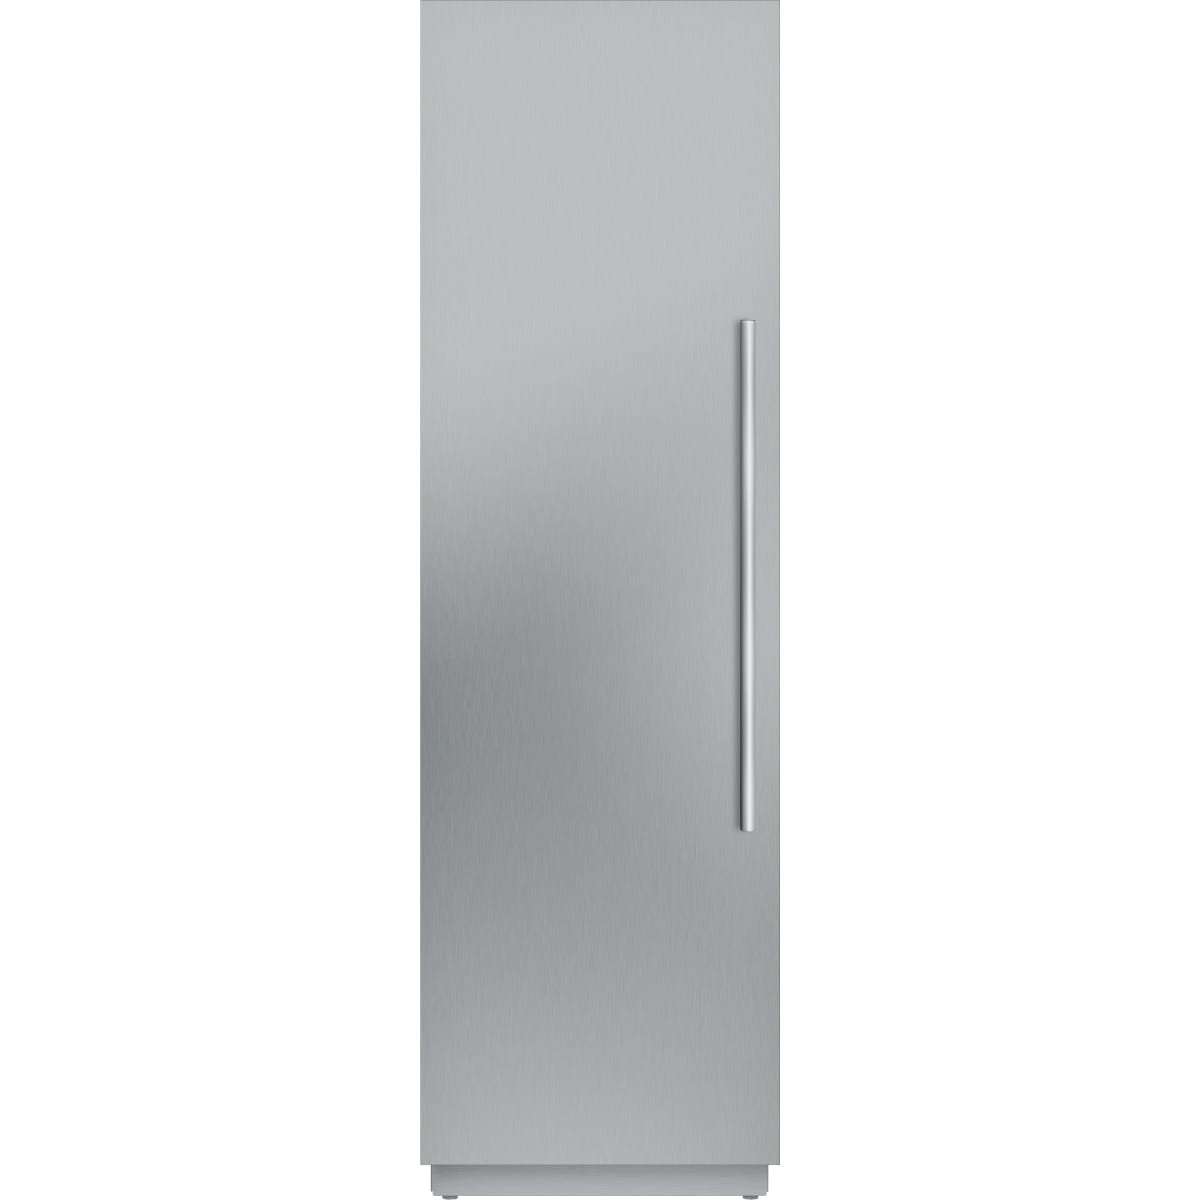 frigidaire 11.2 cu. ft. upright freezer upright from